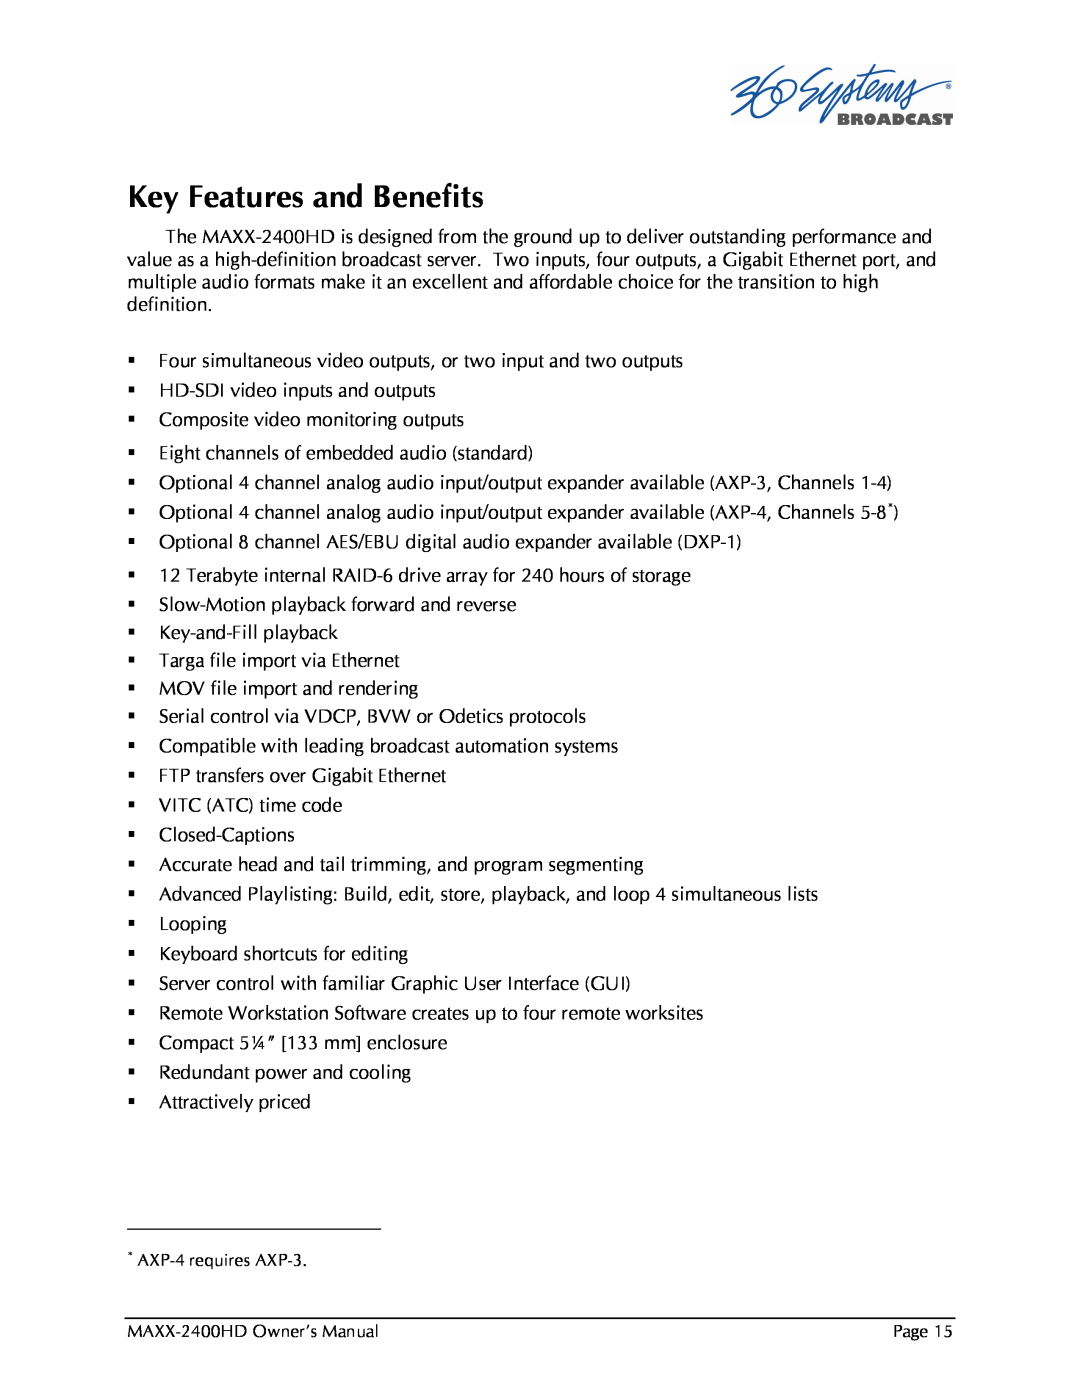 Maxxsonics MAXX-2400HD manual Key Features and Benefits 